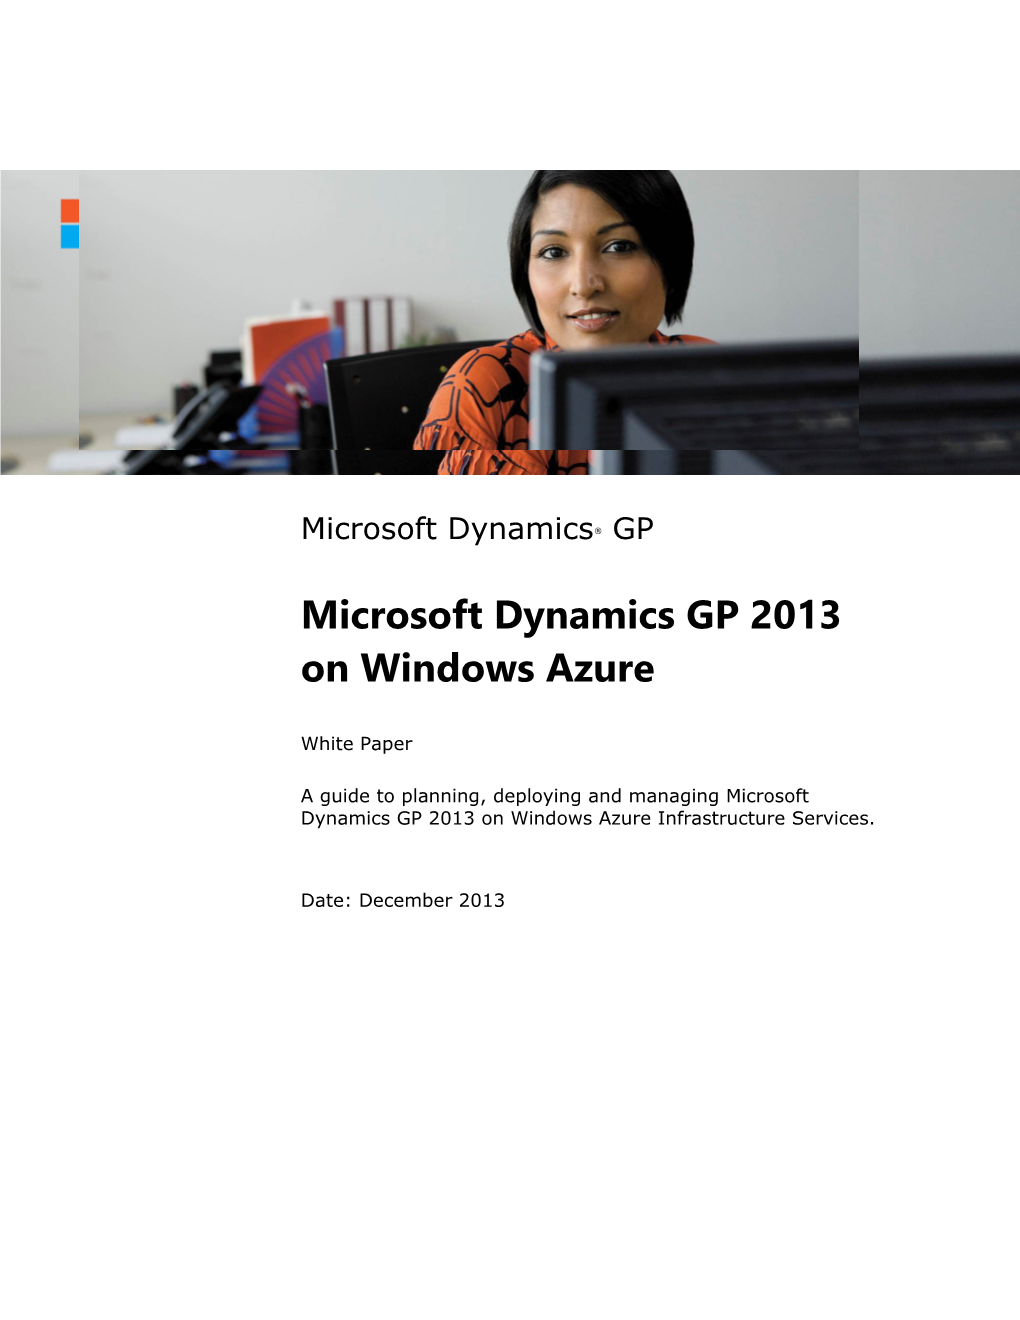 Microsoft Dynamics GP 2013 on Windows Azure